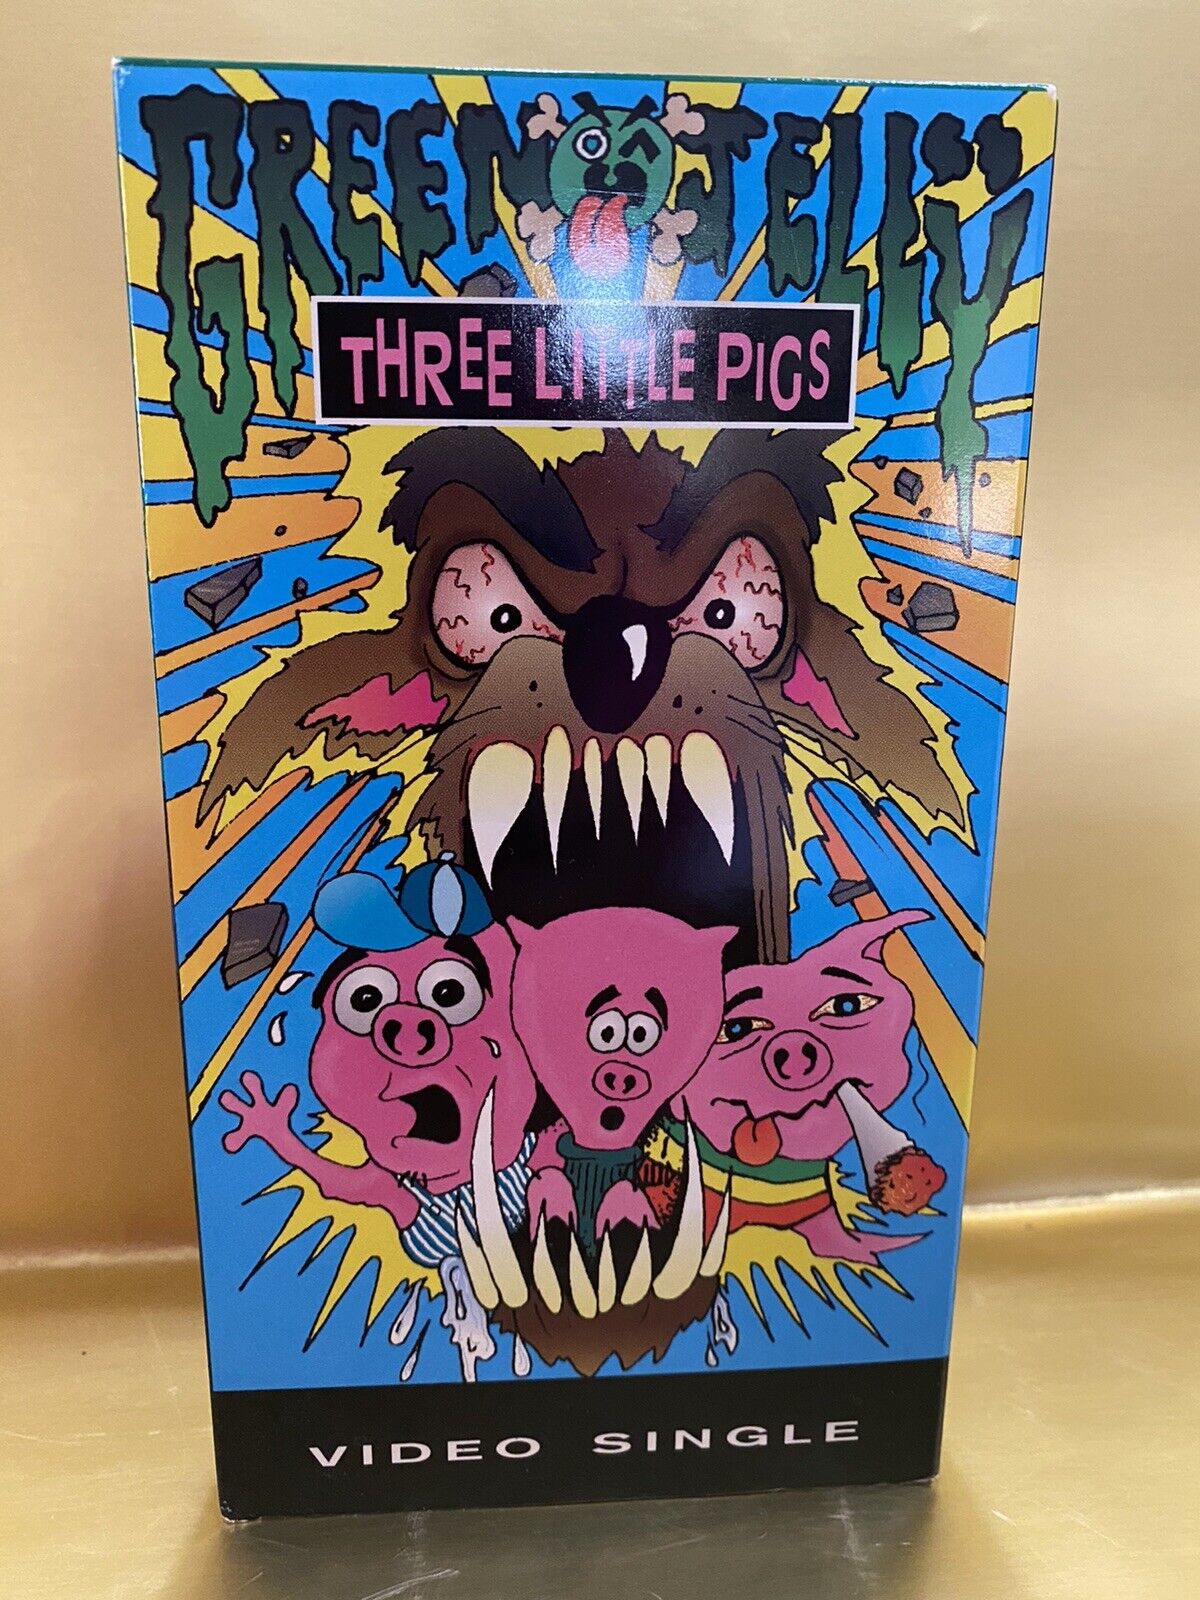 Green Jelly Three Little Pigs Video Single (VHS, 1993) 724451409433 | eBay